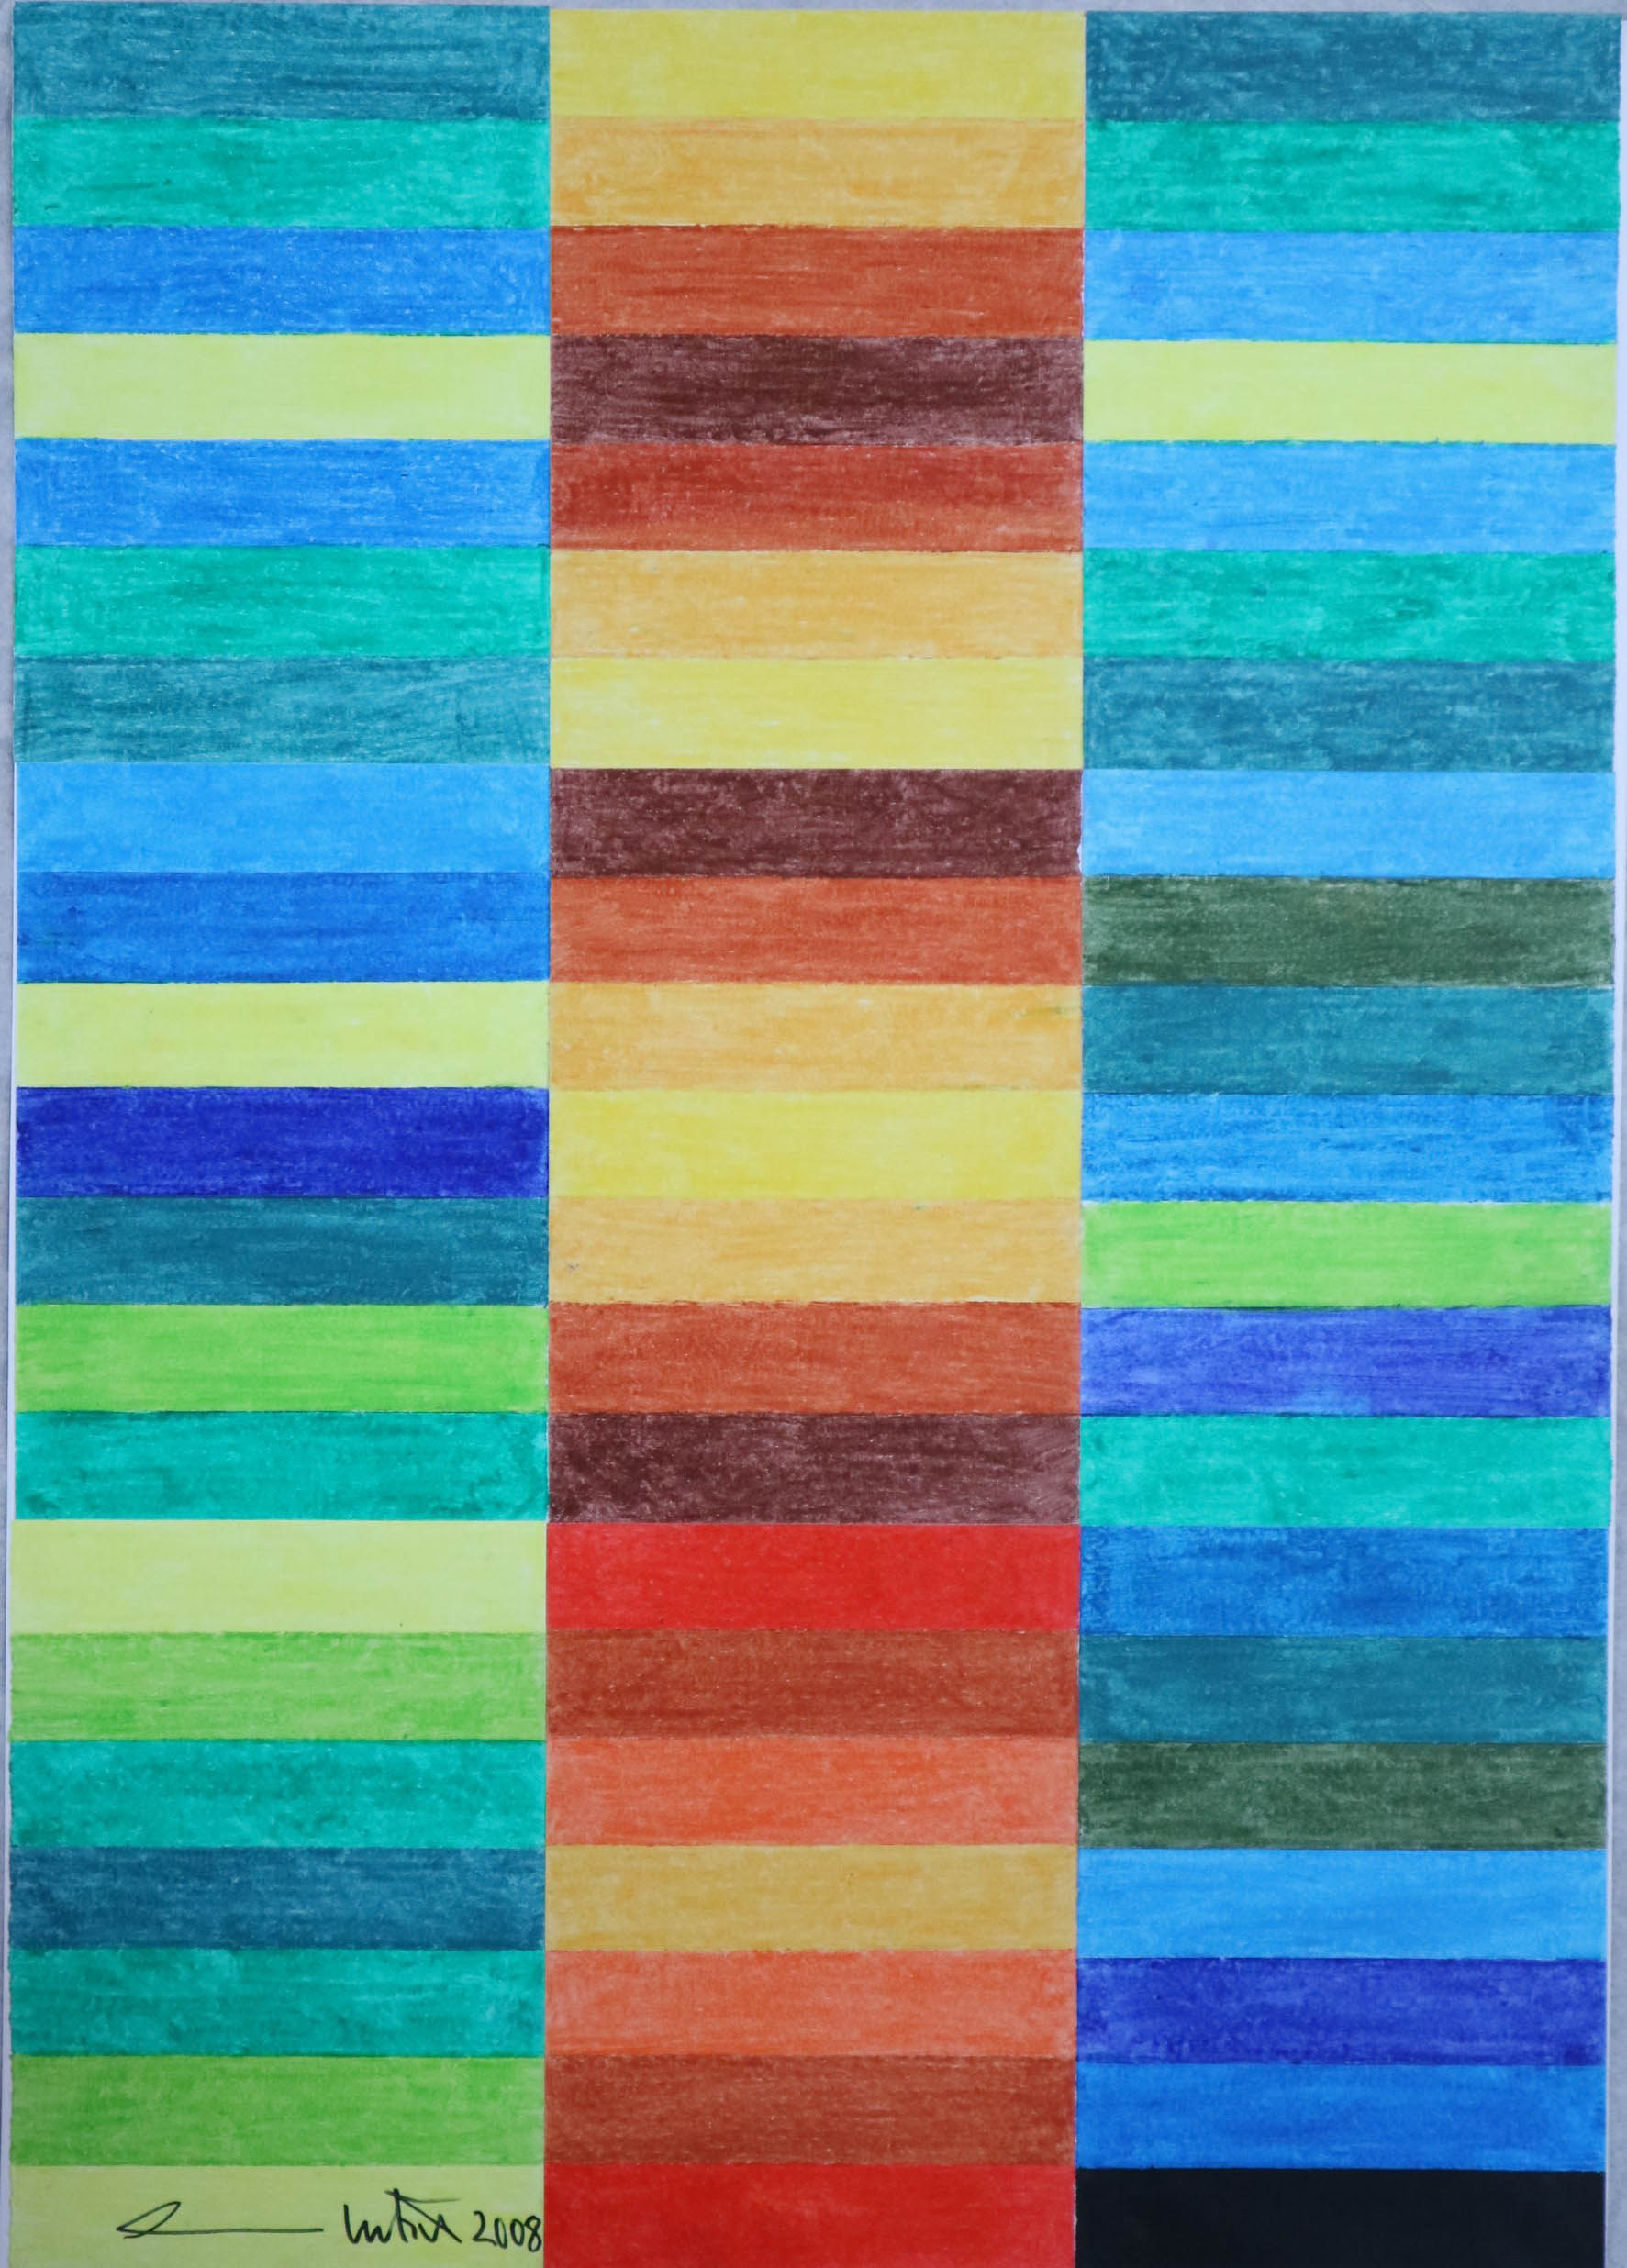 Teoria dei colori 18 (disegno) di Nitsch, Hermann - Fondazione Morra (sec. XXI)